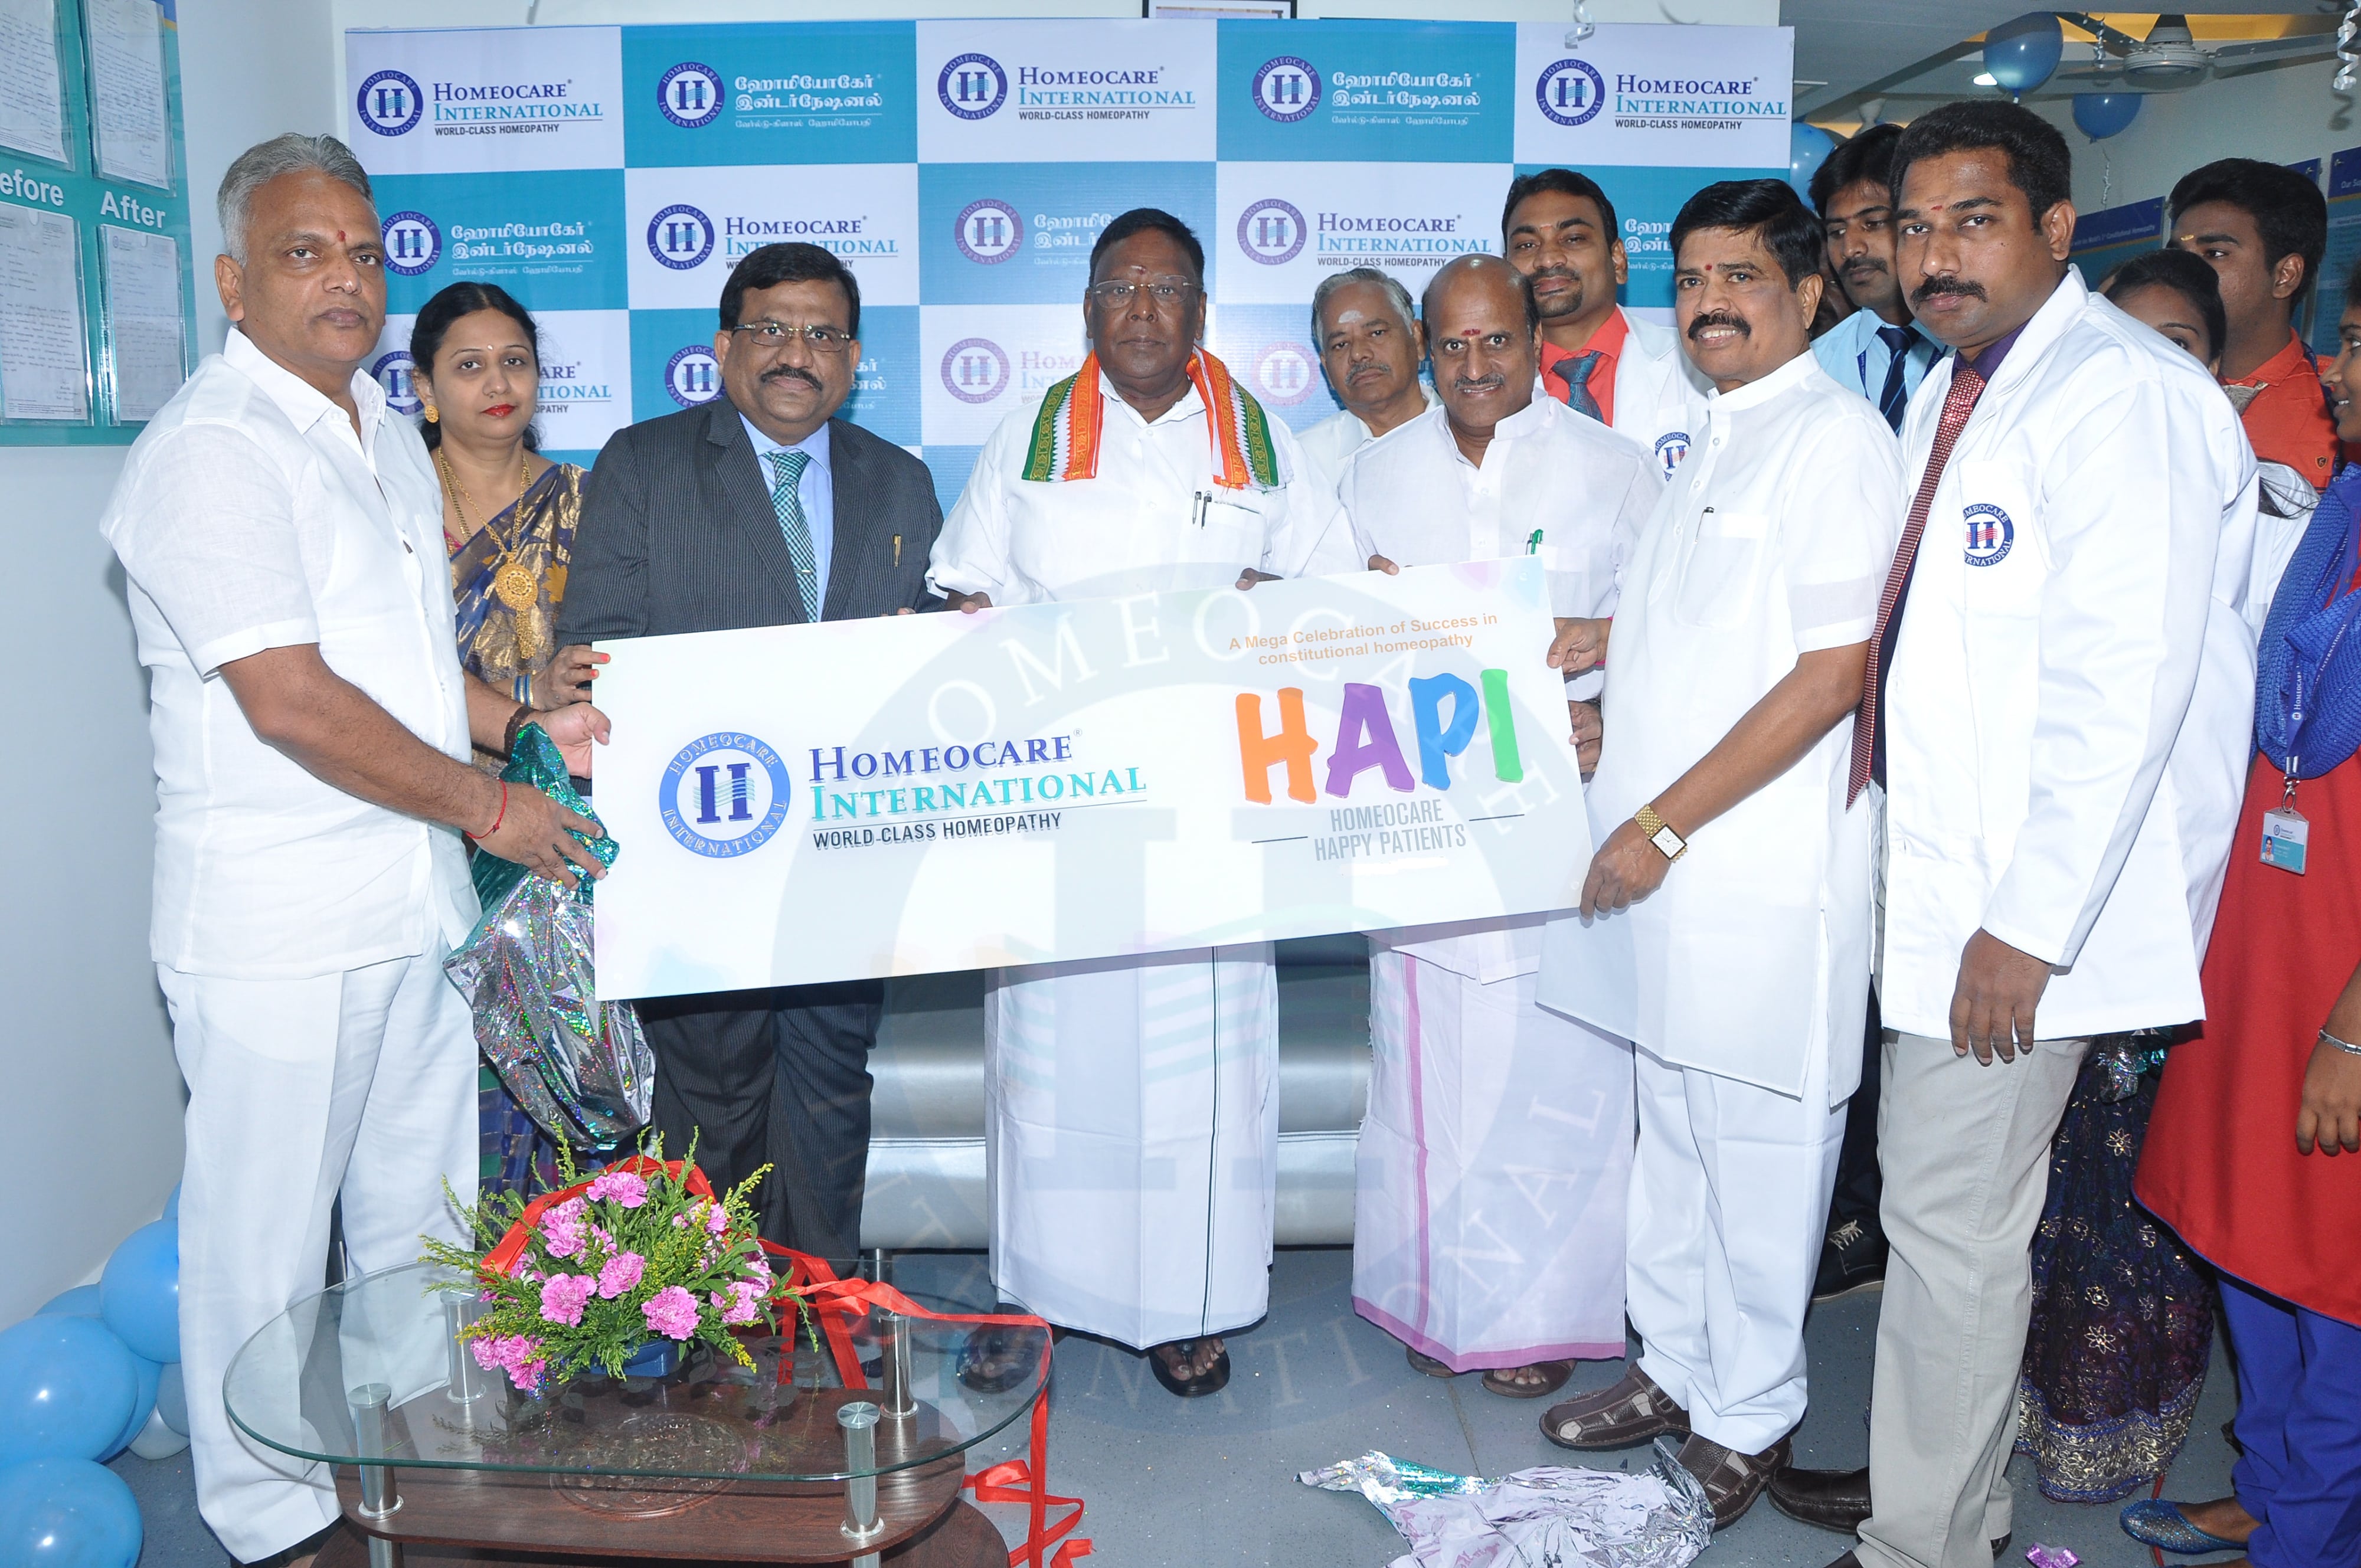 Homeocare International HAPI Patient Logo Launched by CM V.Narayanswamy Garu